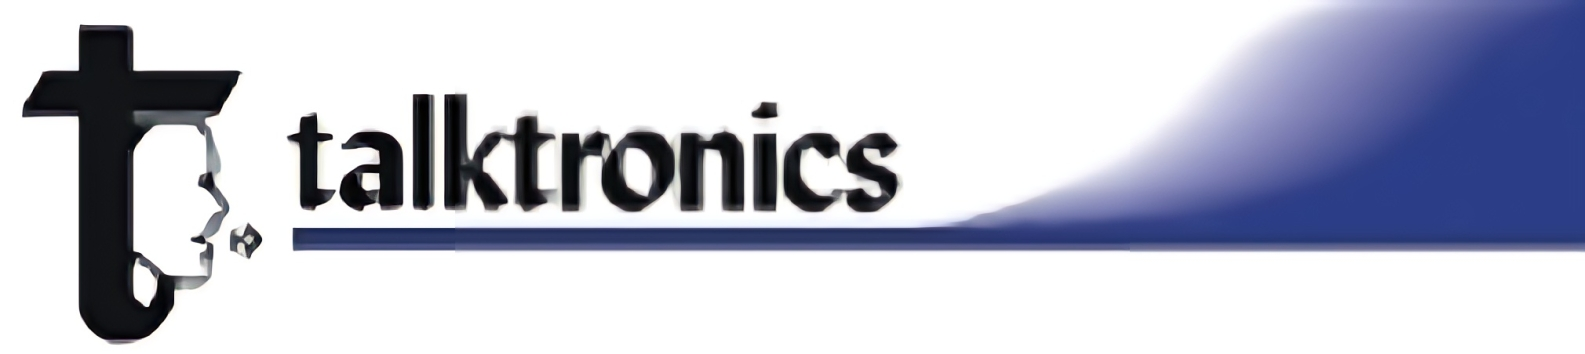 Talktronics Inc